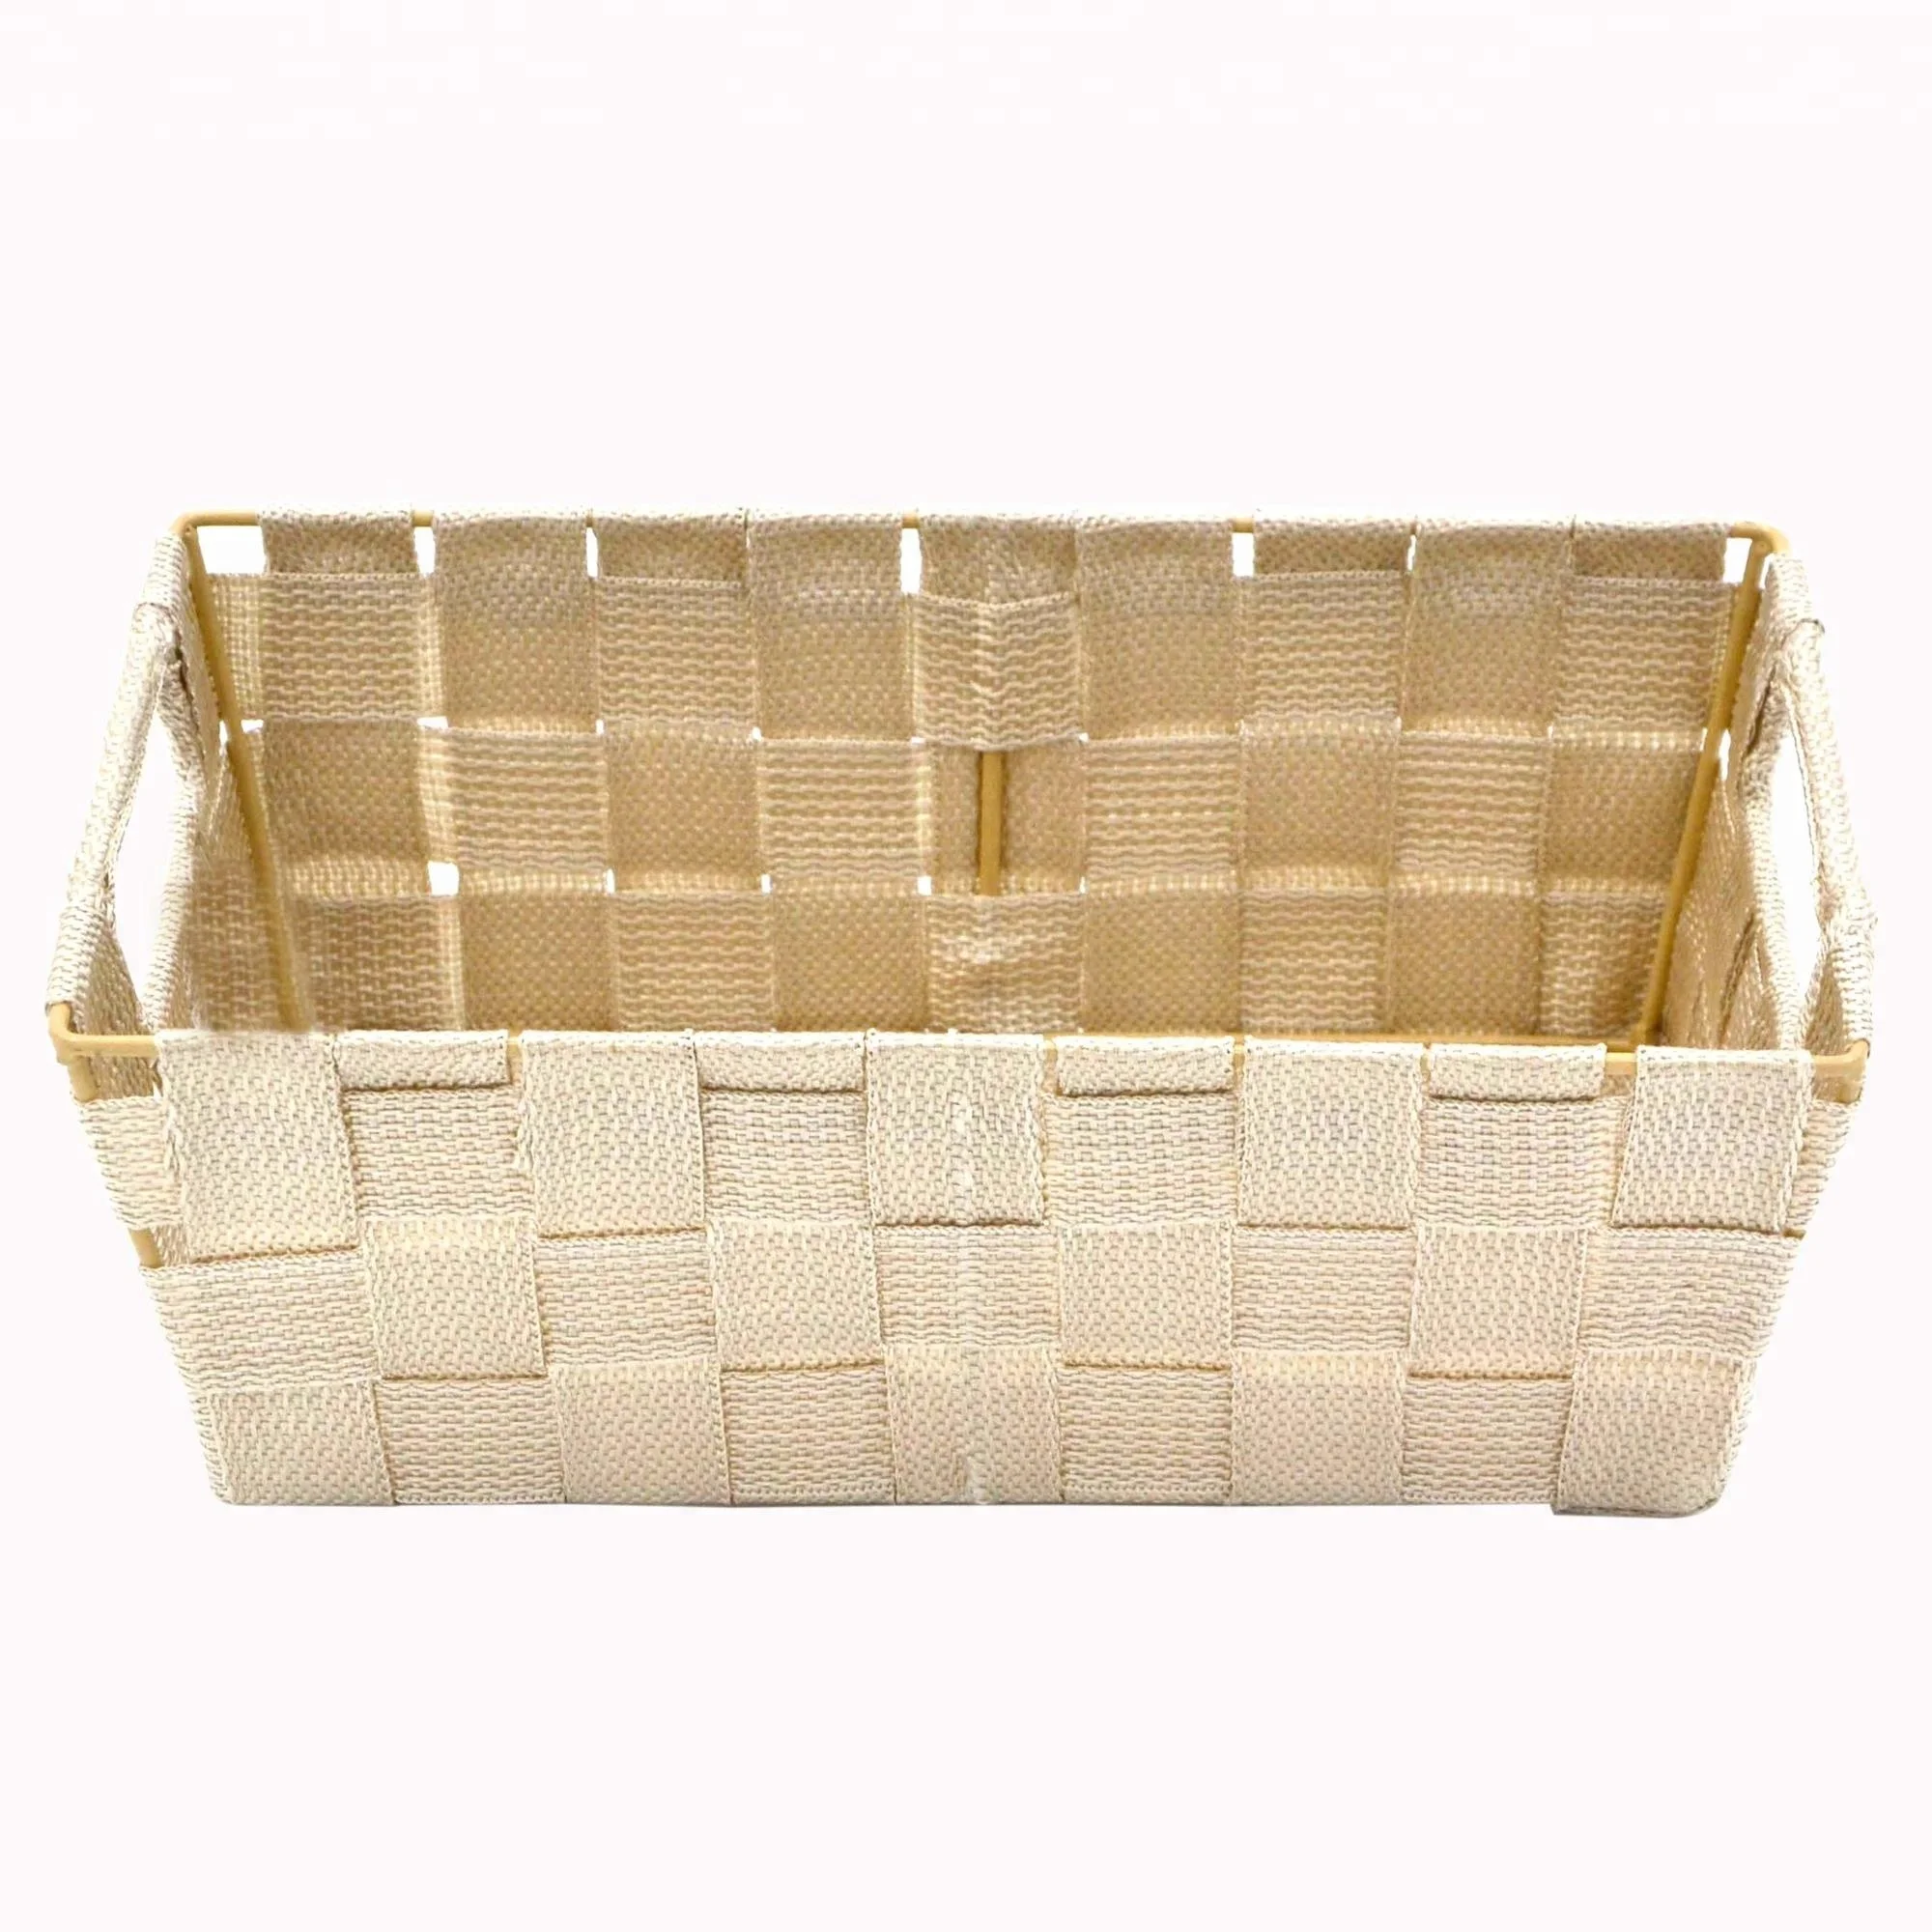 rattan storage baskets for shelves